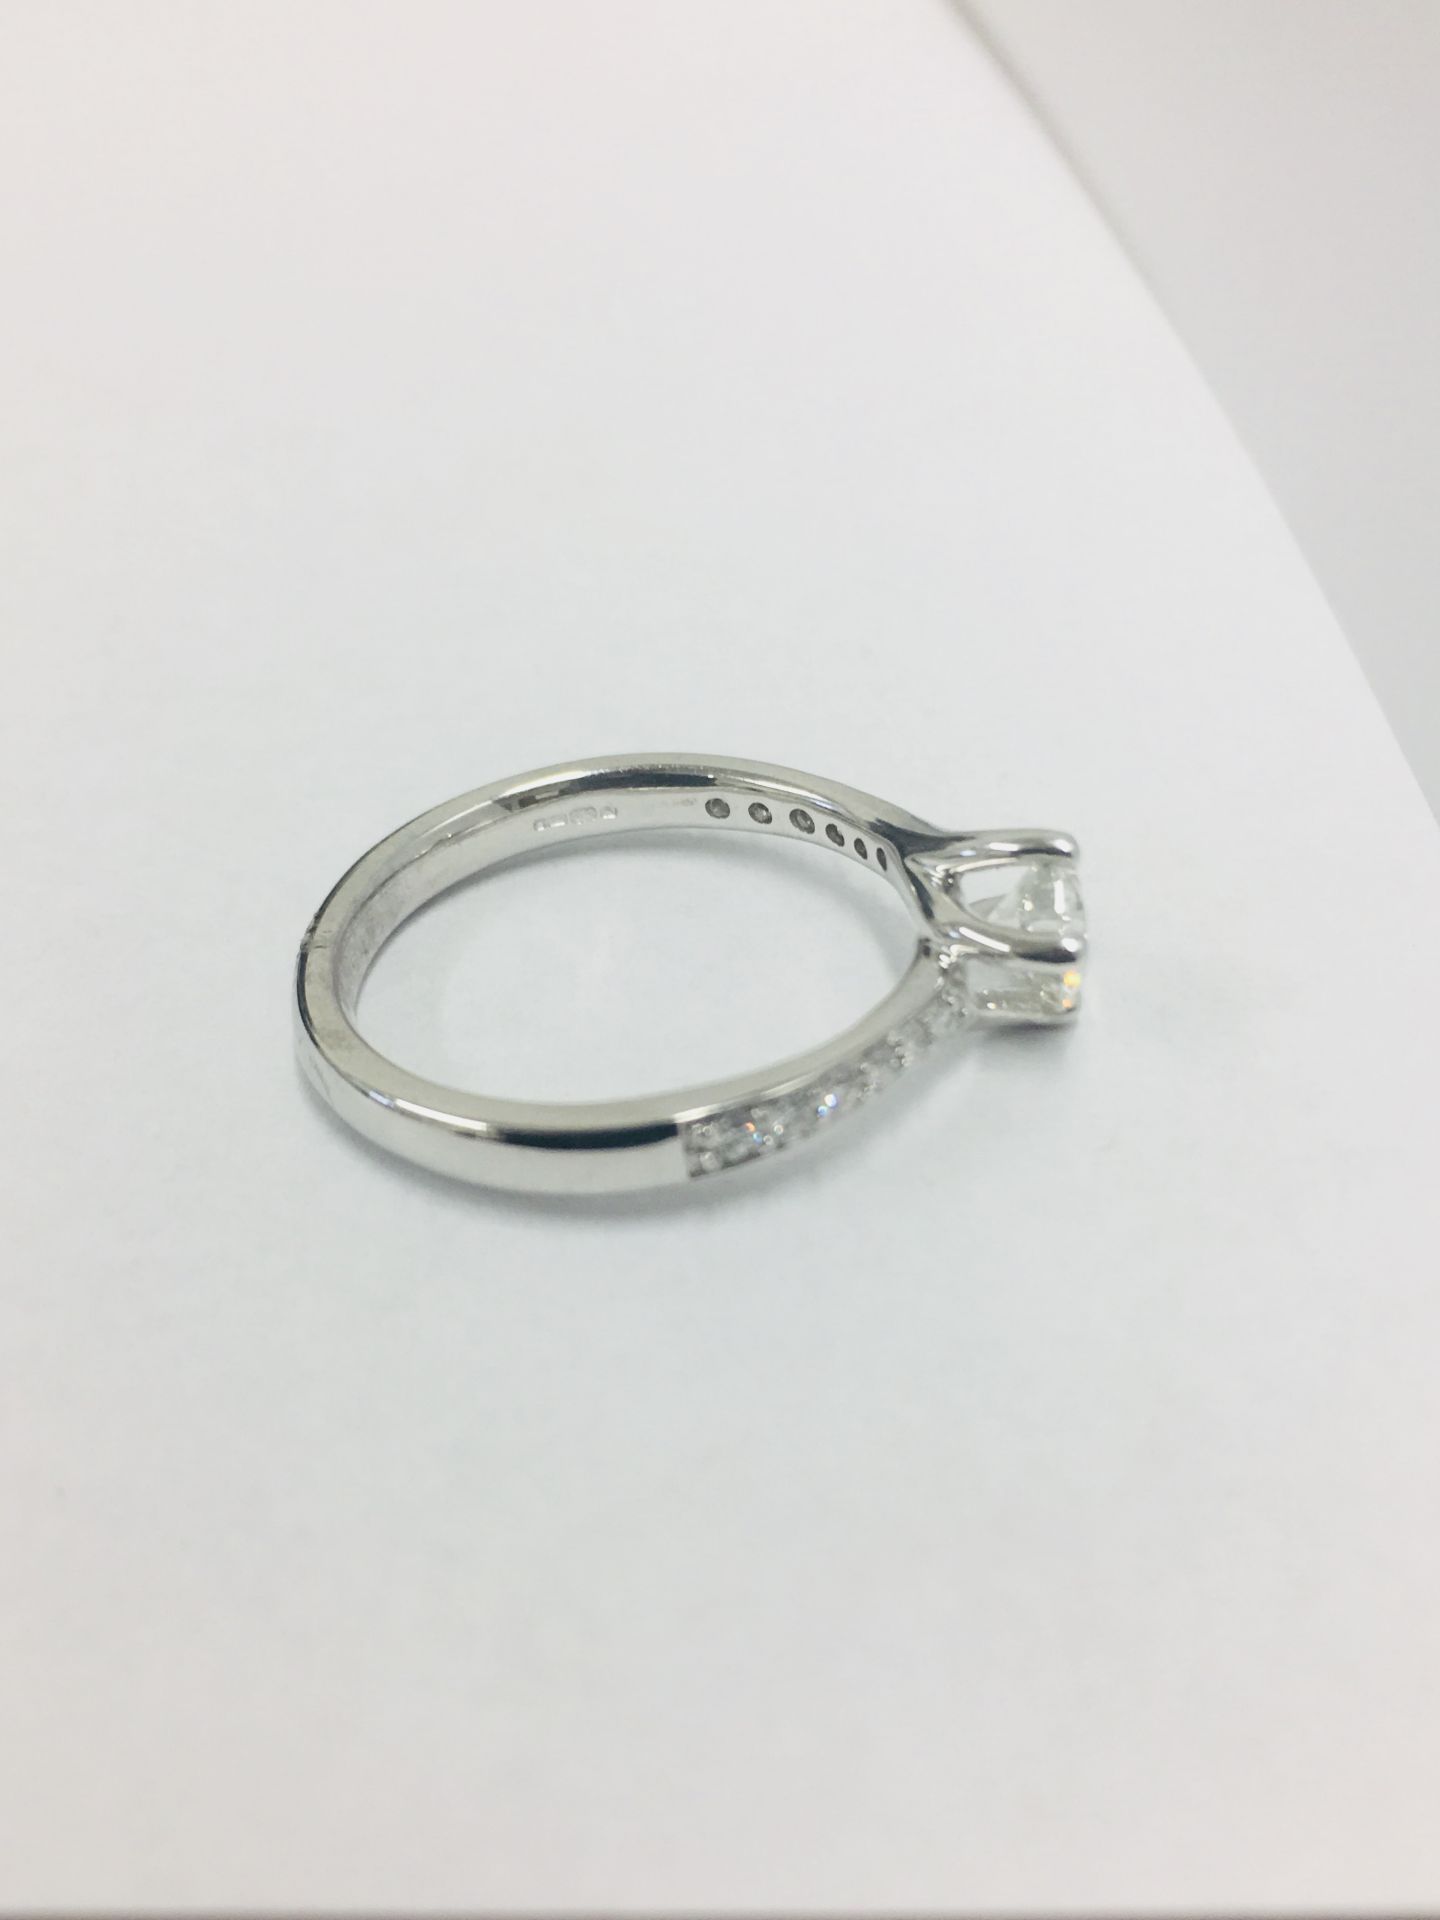 platinum damond solitaire ring,0.50ct brilliant cut diamond h colour vs clarity(clarity enhanced), - Image 5 of 6